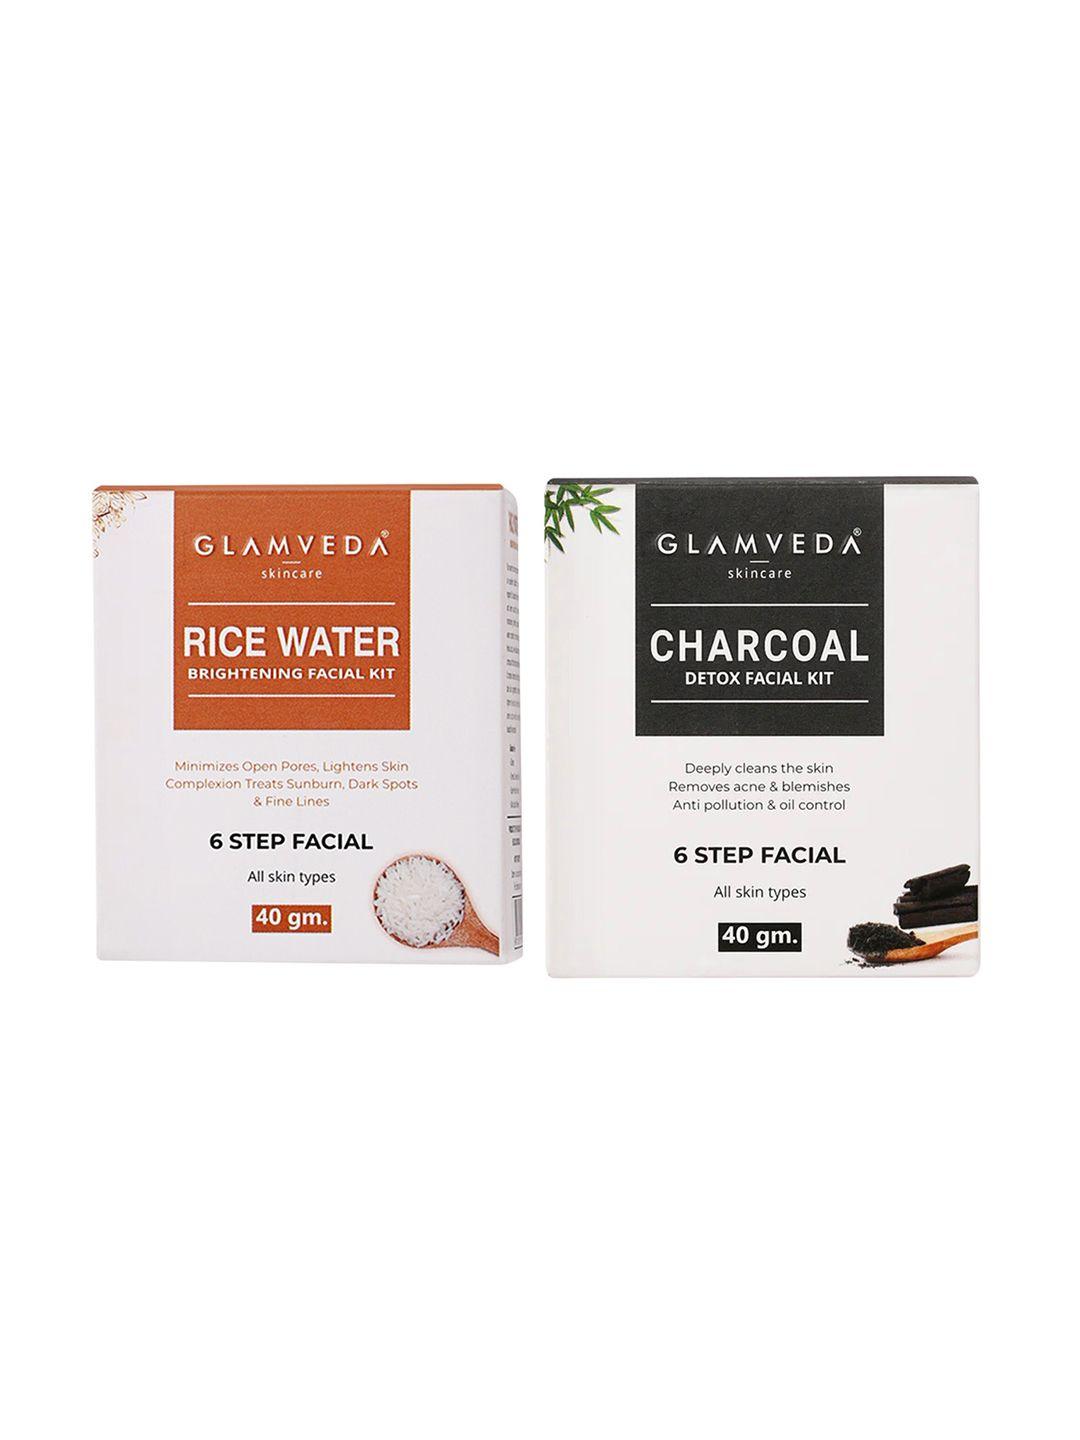 glamveda-rice-water-brightening-facial-kit-&-charcoal-detox-&-anti-pollution-facial-kit-40gm-each